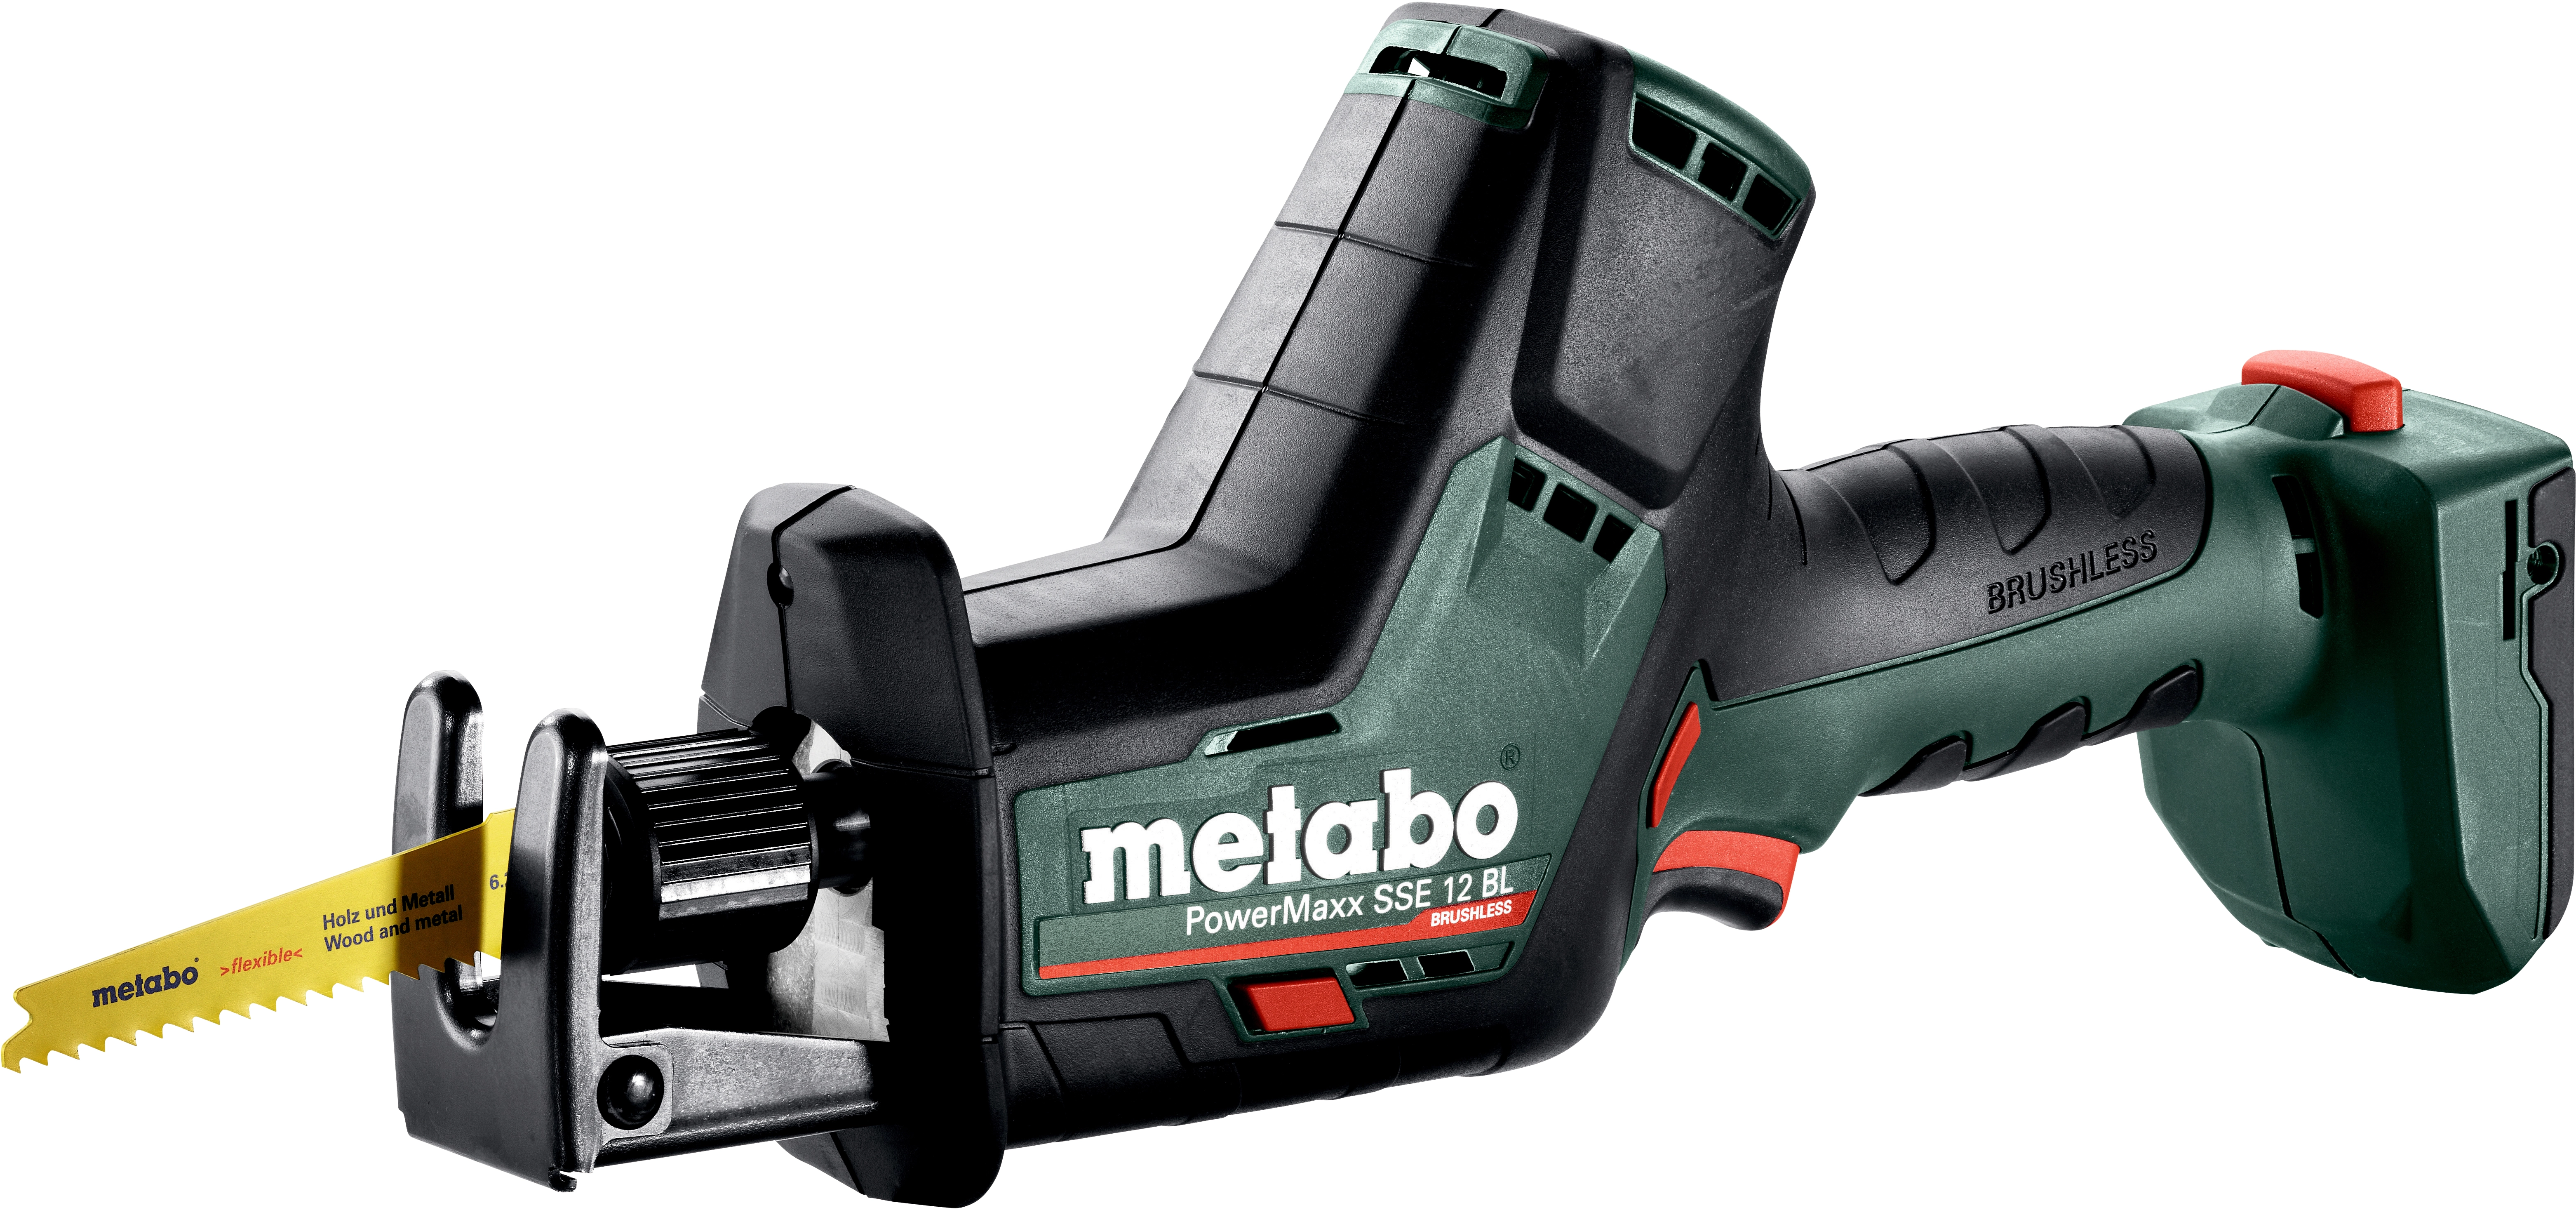 Metabo Akku-Säbelsäge PowerMaxx SSE 12 BL im Kunststoffkoffer kaufen bei OBI